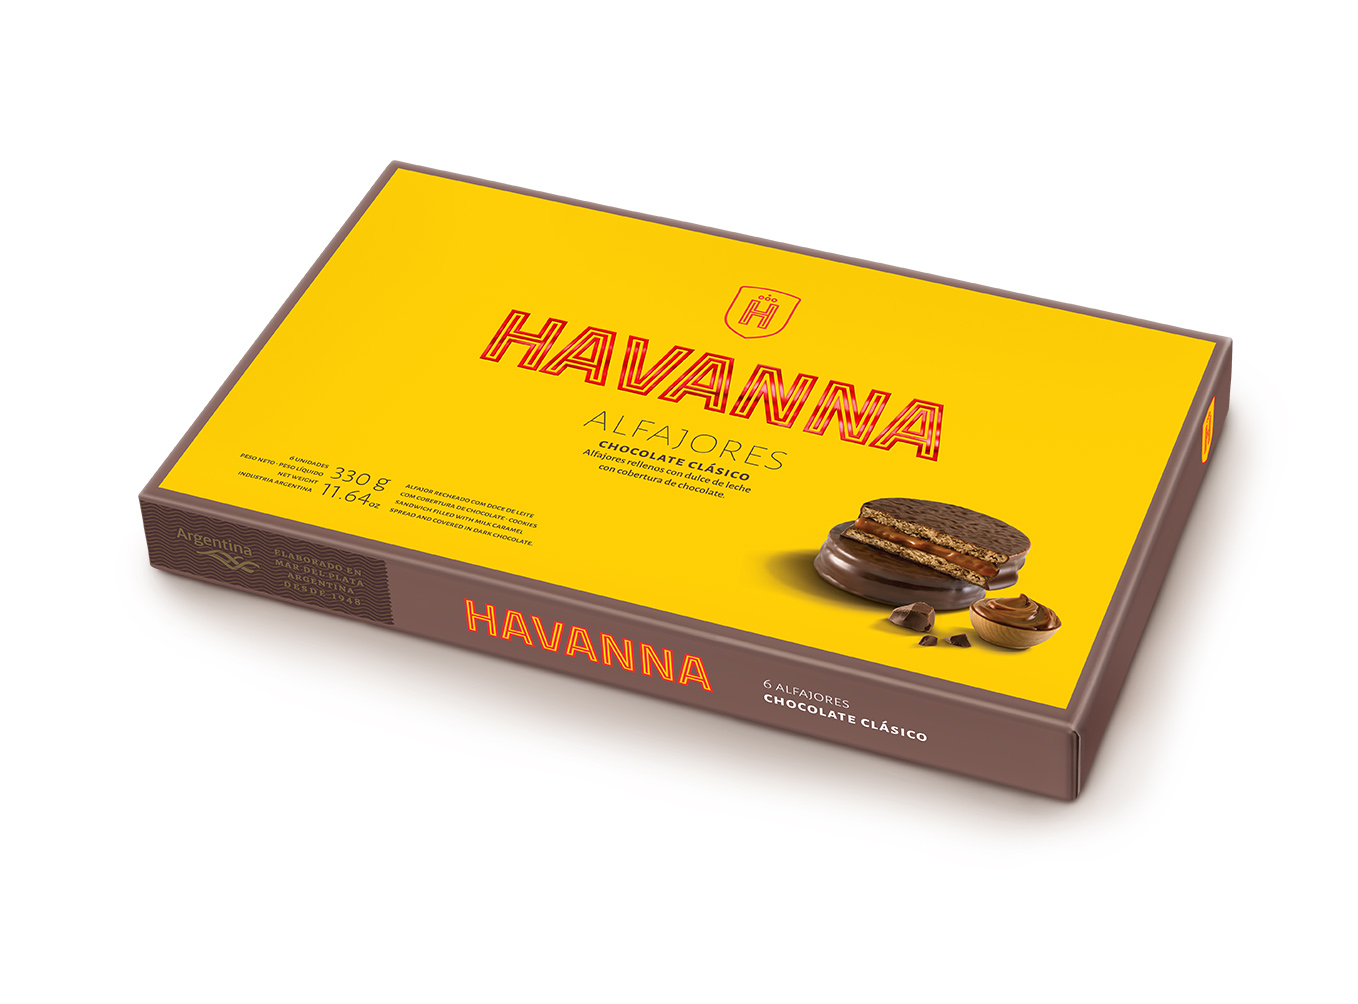 HAVANNA ALFAJORES CHOCOLATE 6 ARGENTINA buy online!